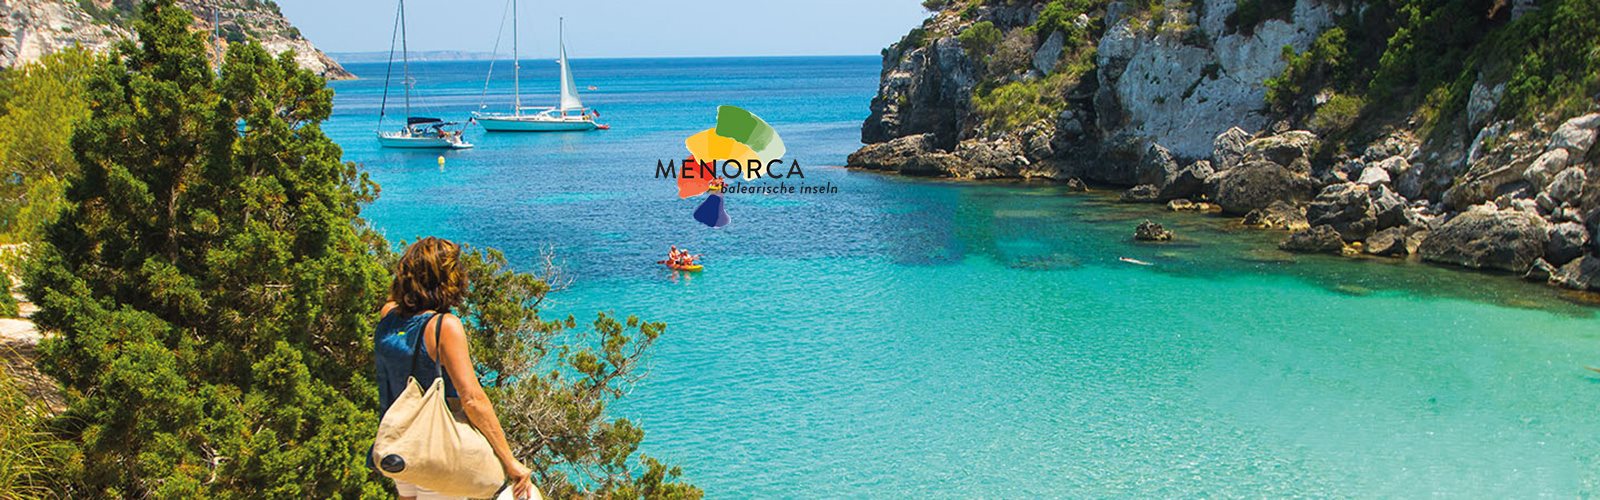 Berühmte Bucht Menorca mit türkisem Meer, grüner Natur und Selgelbooten